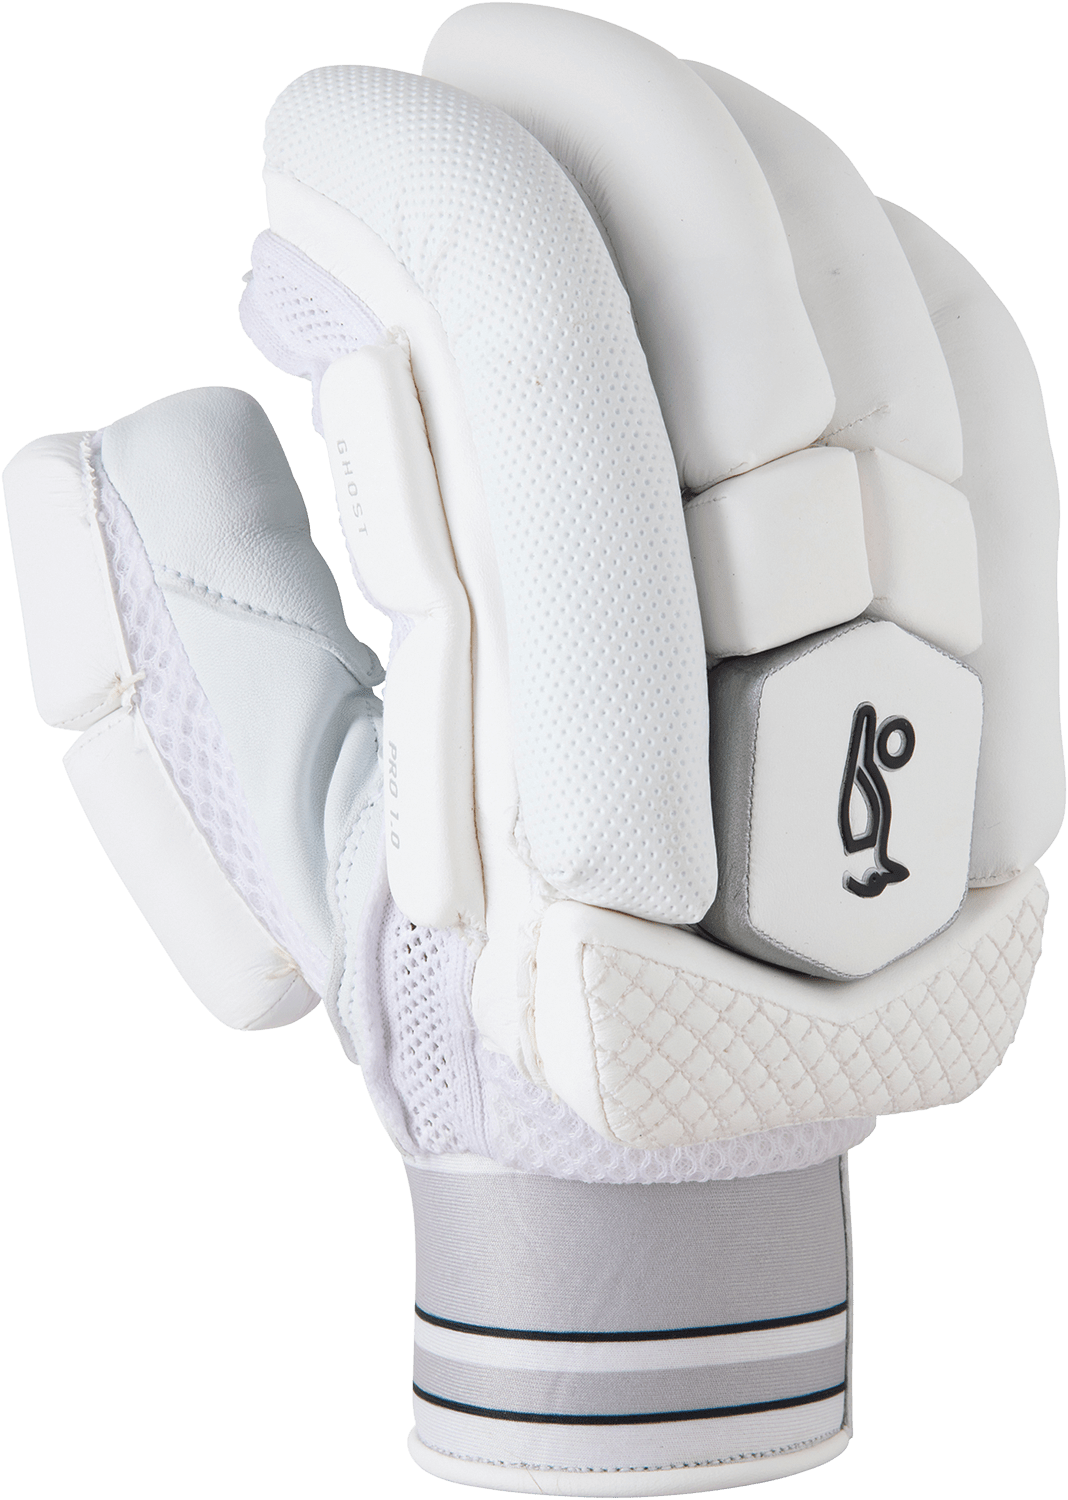 Kookaburra Batting Gloves Youth / RH Kookaburra Ghost Pro 1.0 Cricket Batting Gloves 2021